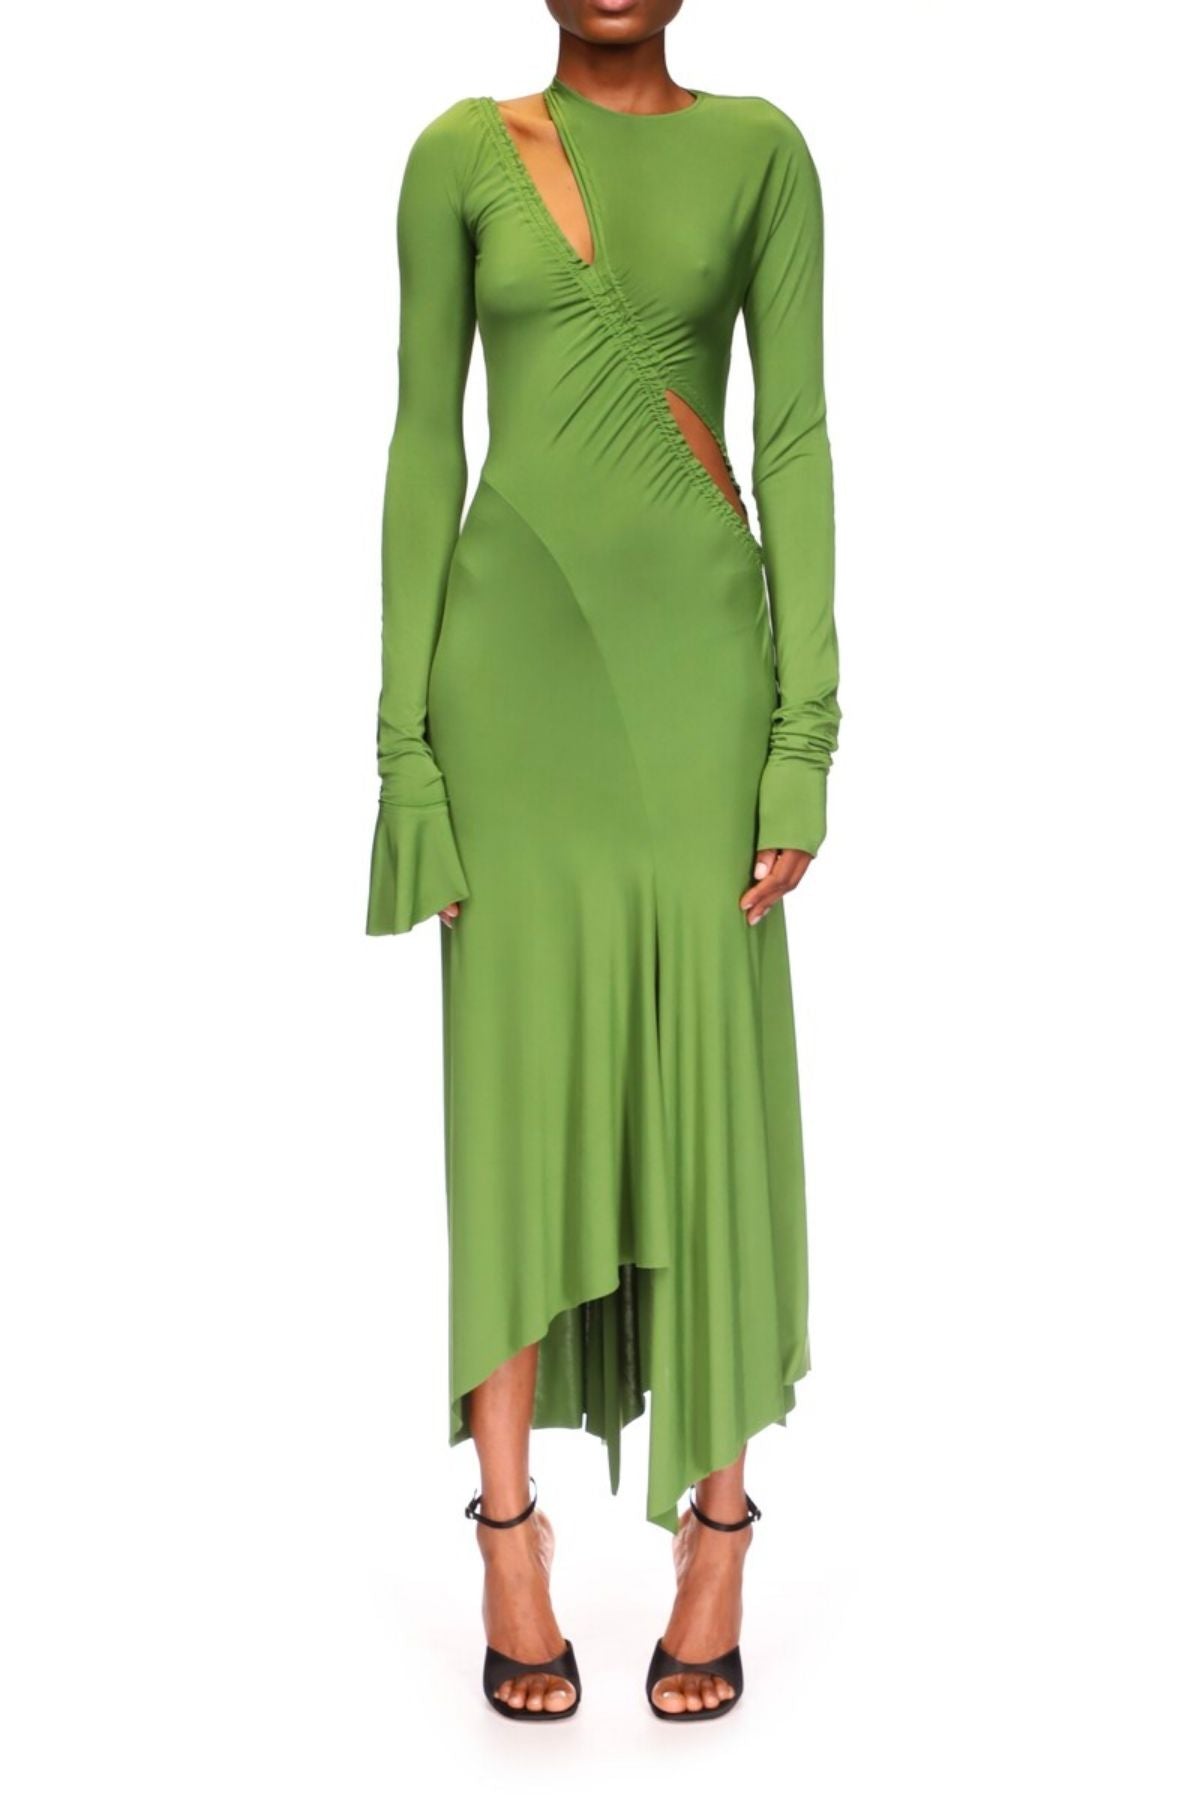 Victoria Beckham Asymmetric Slash Jersey Dress - Fern